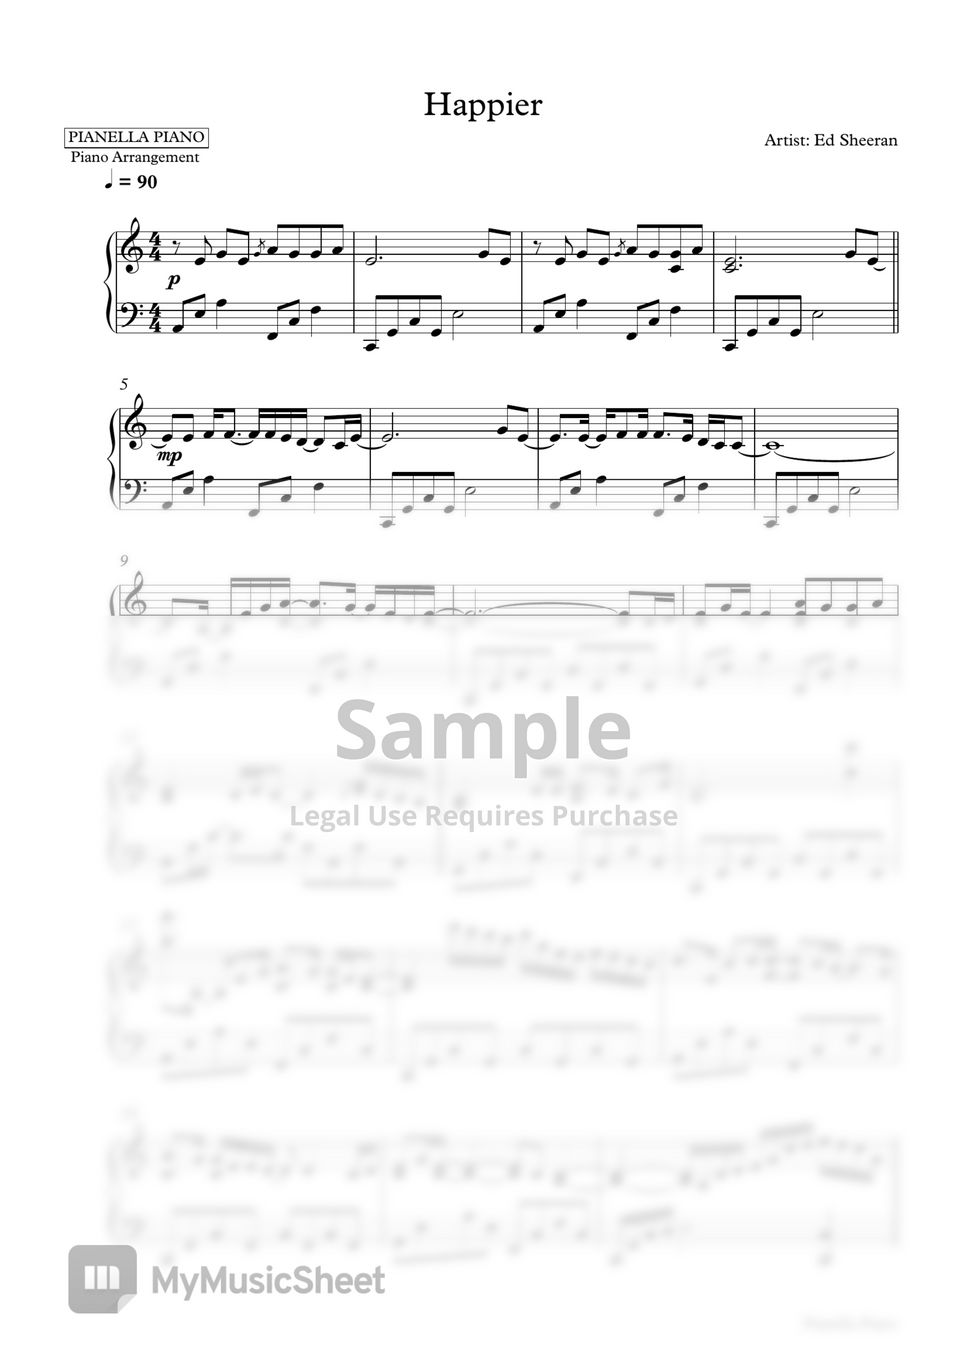 Ed Sheeran - Happier (Piano Sheet) by Pianella Piano